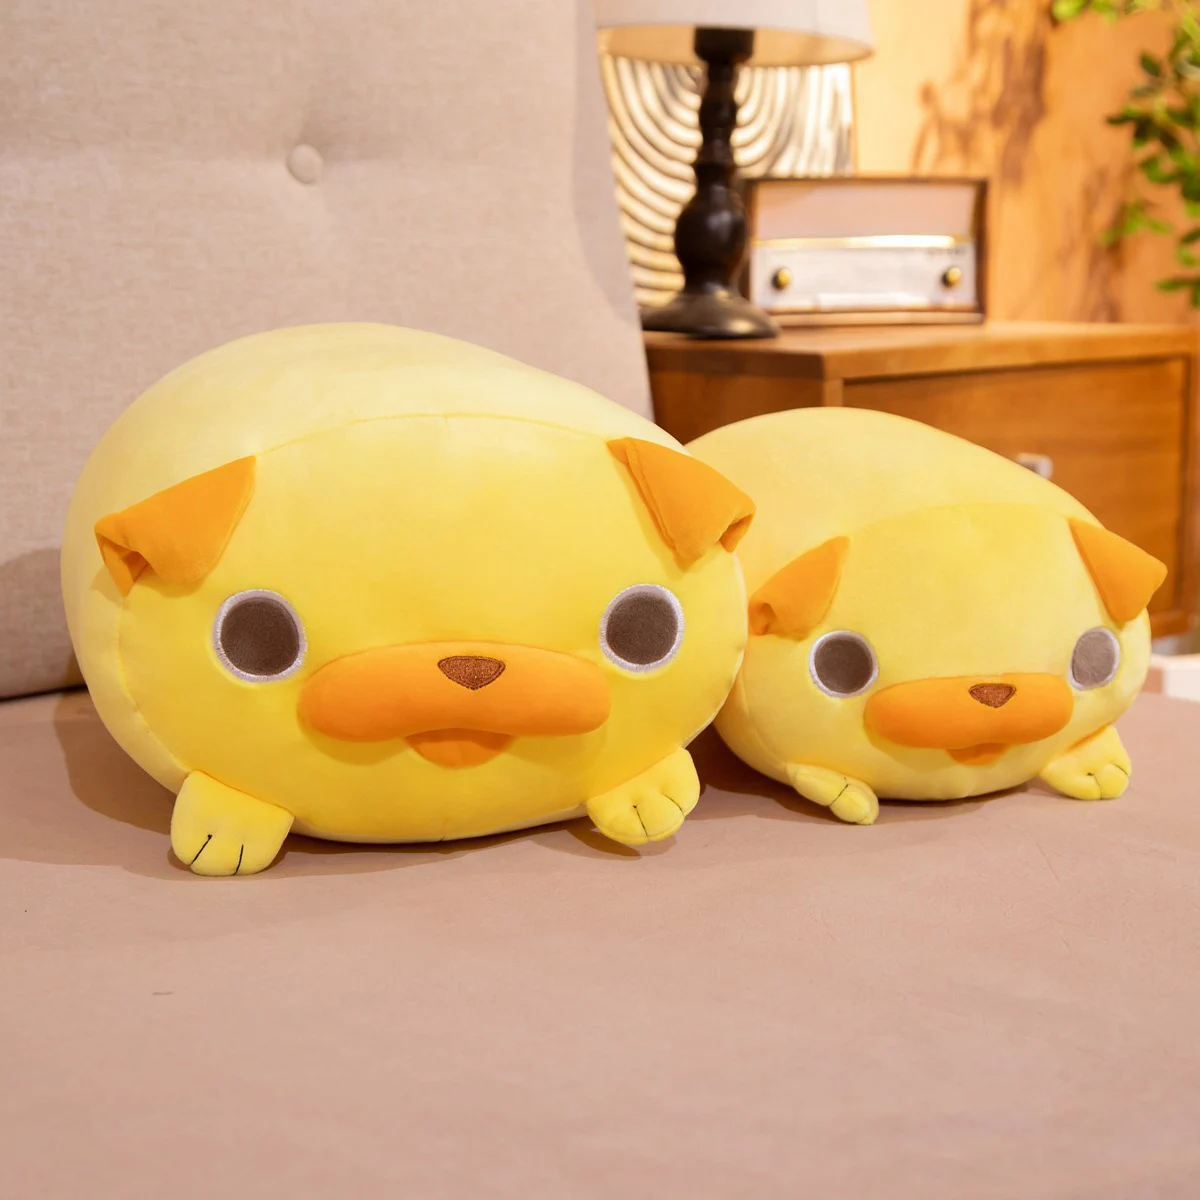 Kawaii Chubby Pug Plush (40cm) - Limited Edition